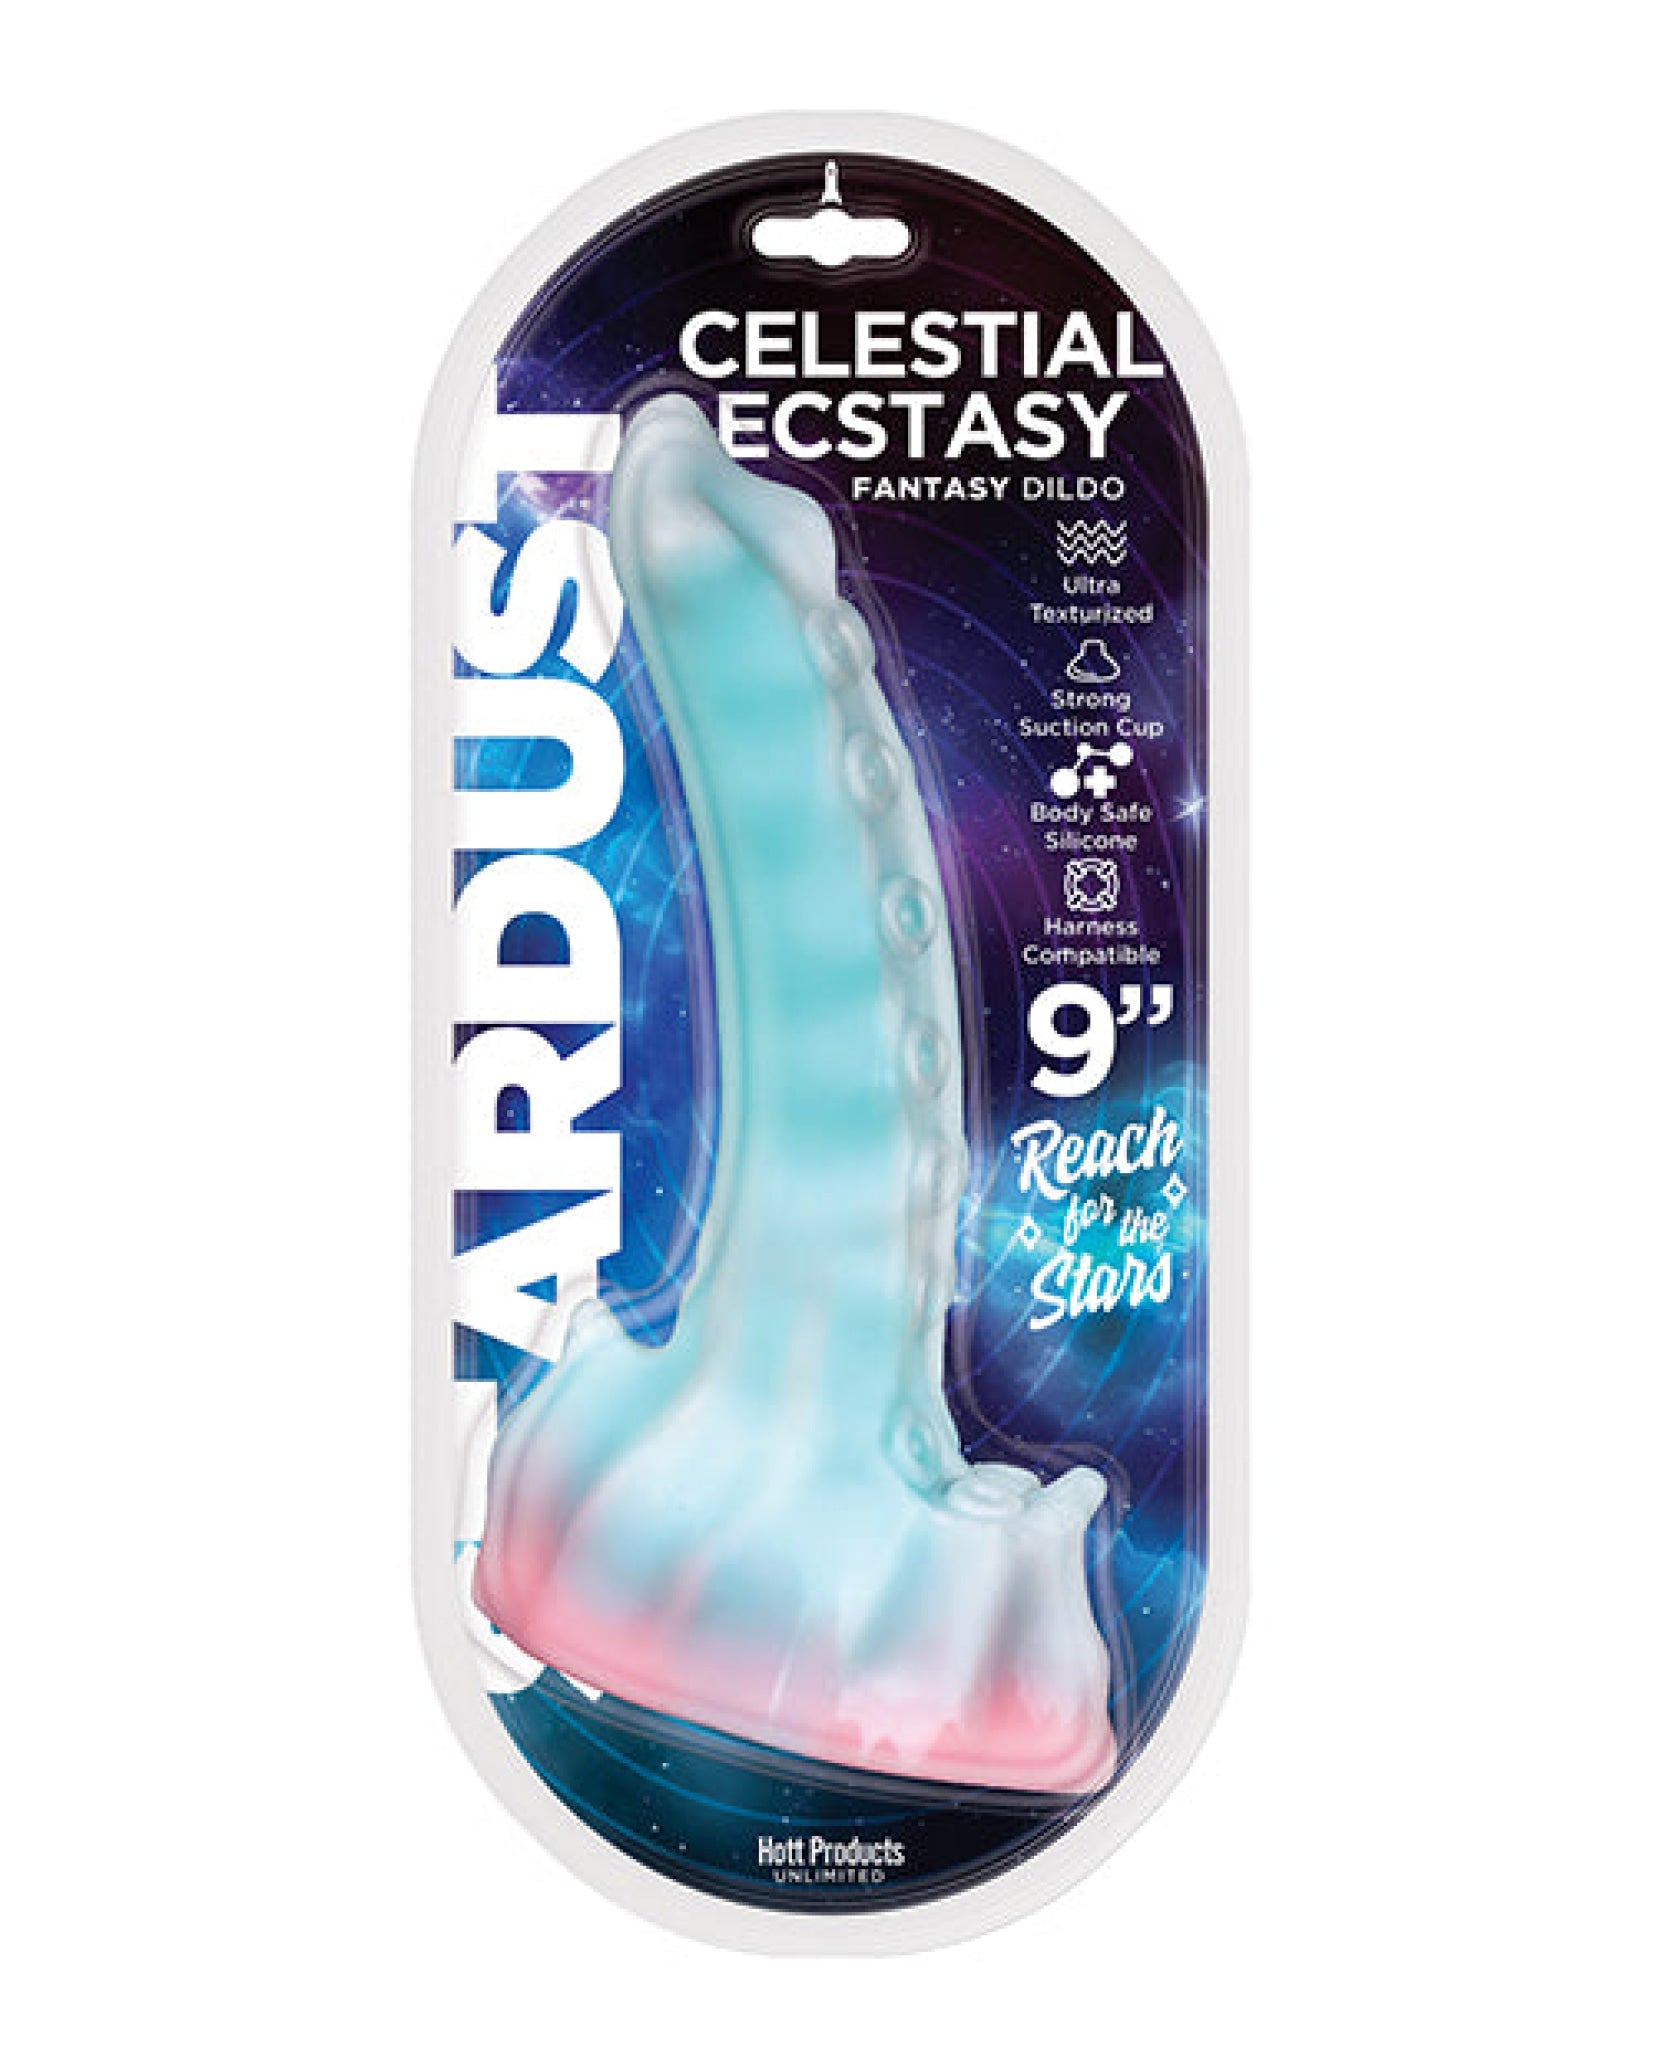 Stardust Celestial Ecstasy 7.5" Dildo Hott Products